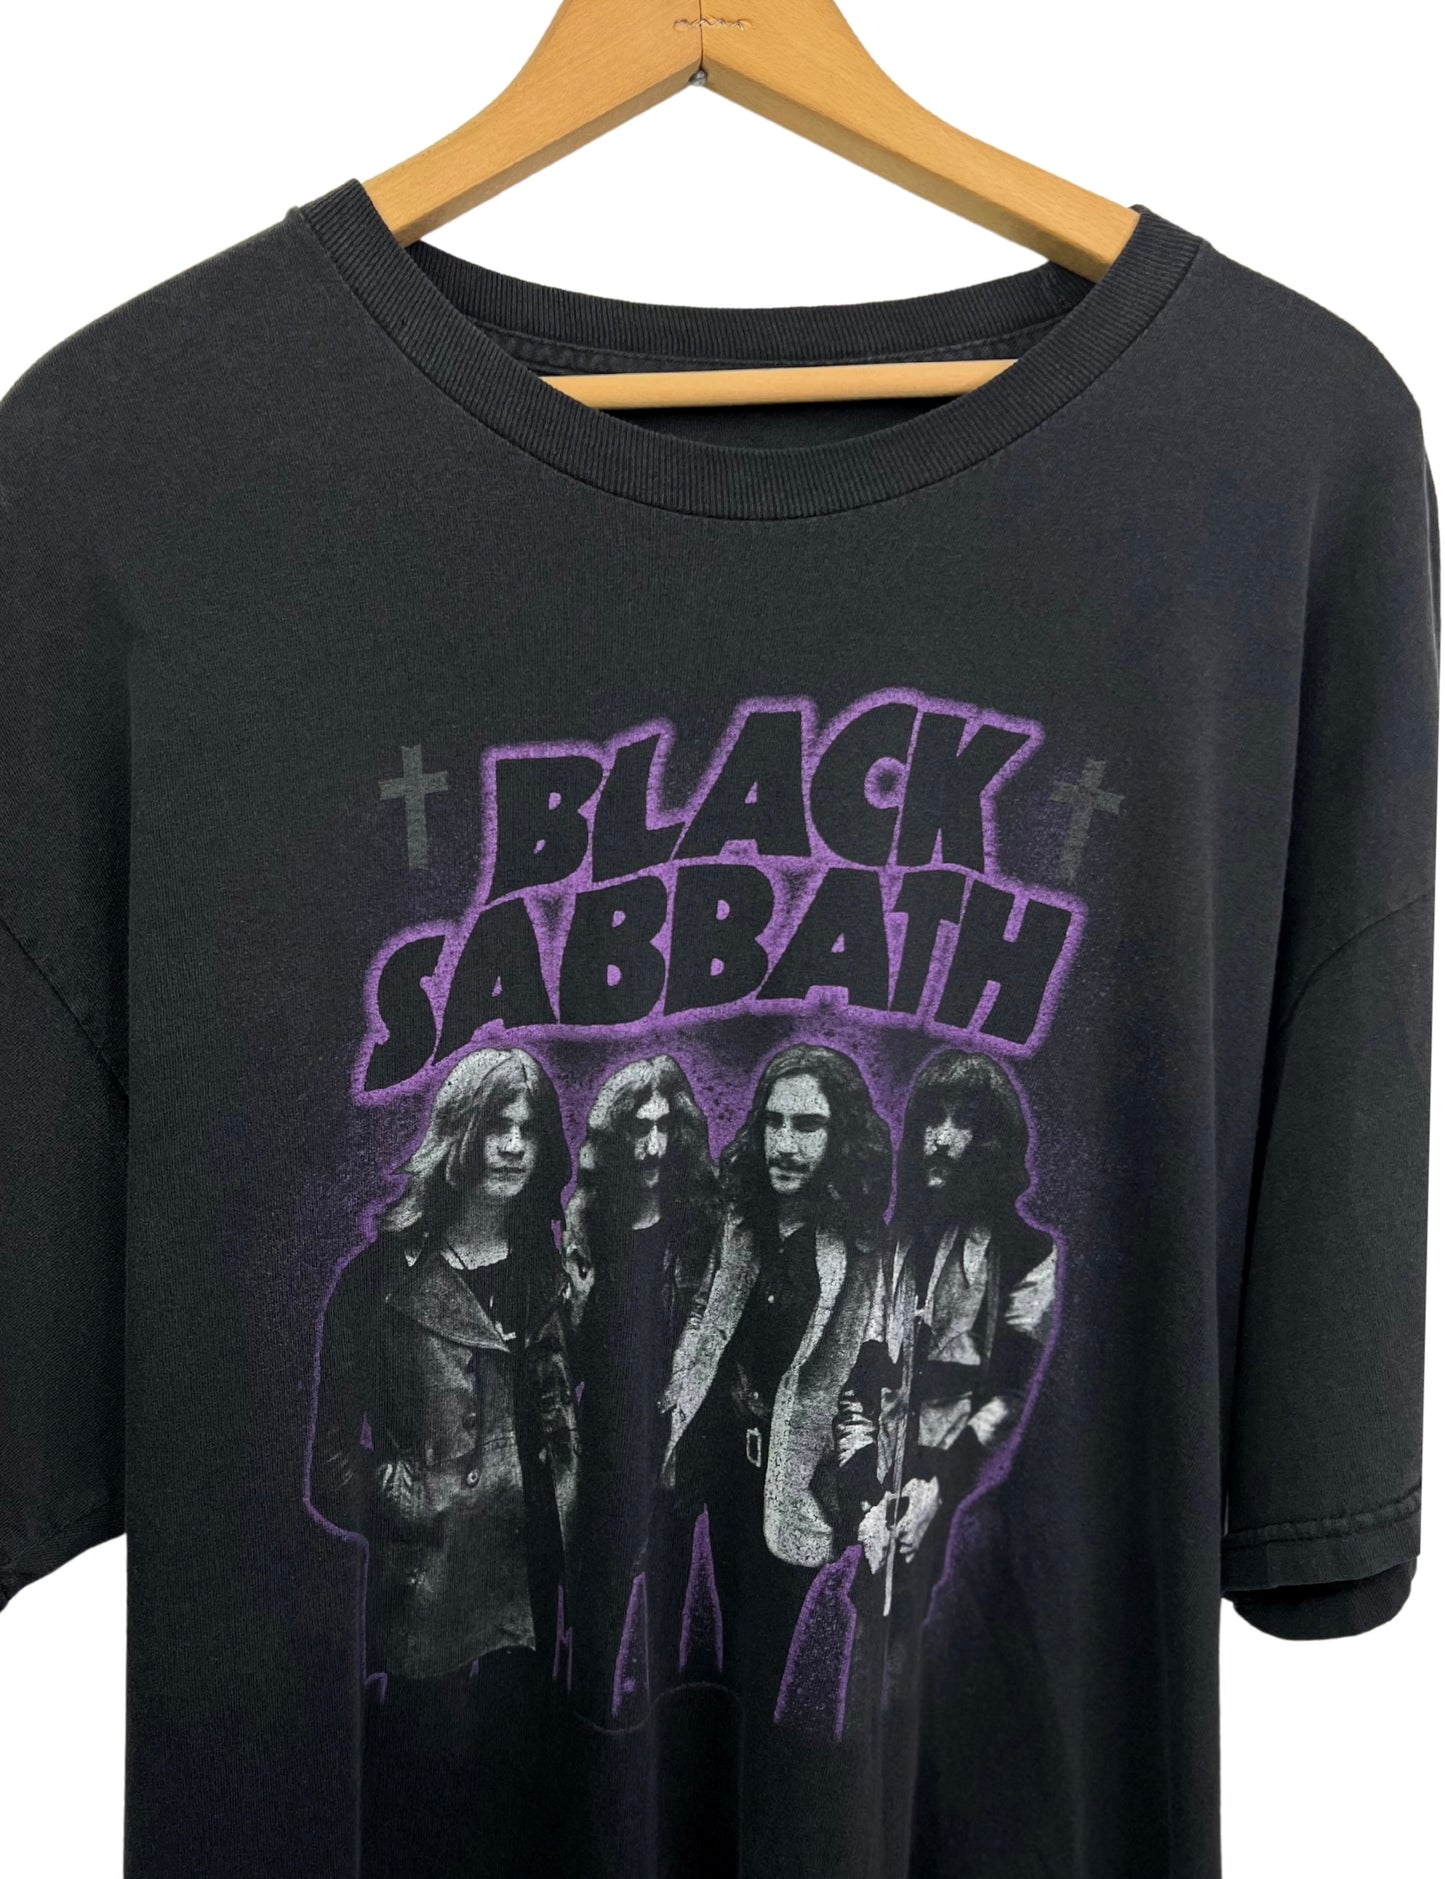 2013 Black Sabbath Band T-shirt Size Large